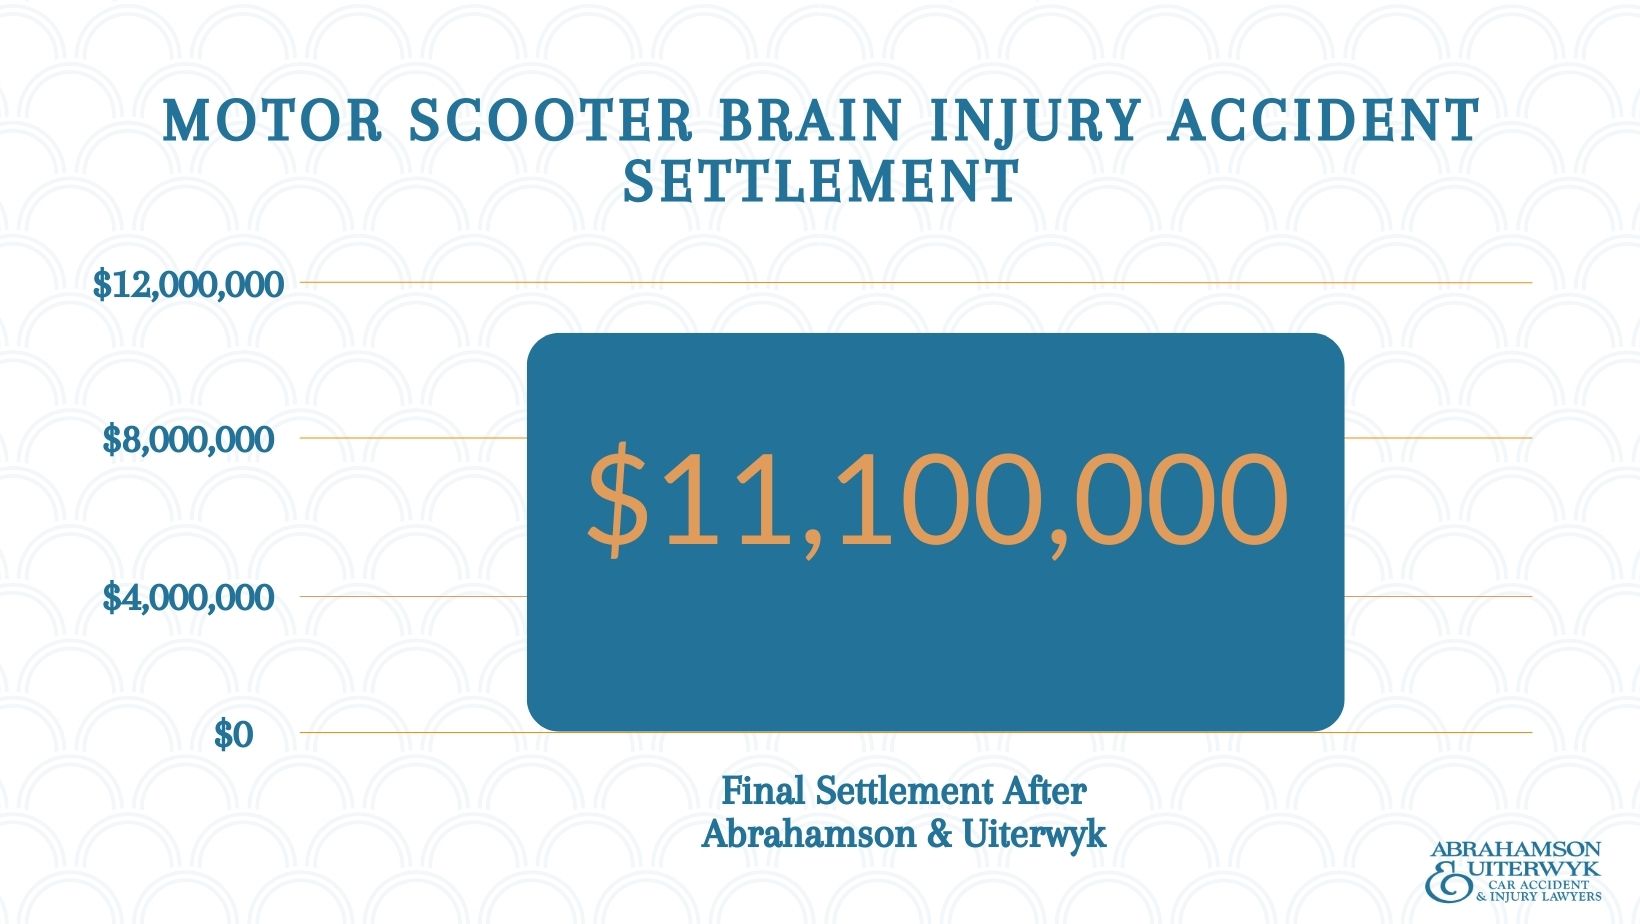 Florida motor scooter traumatic brain injury settlement